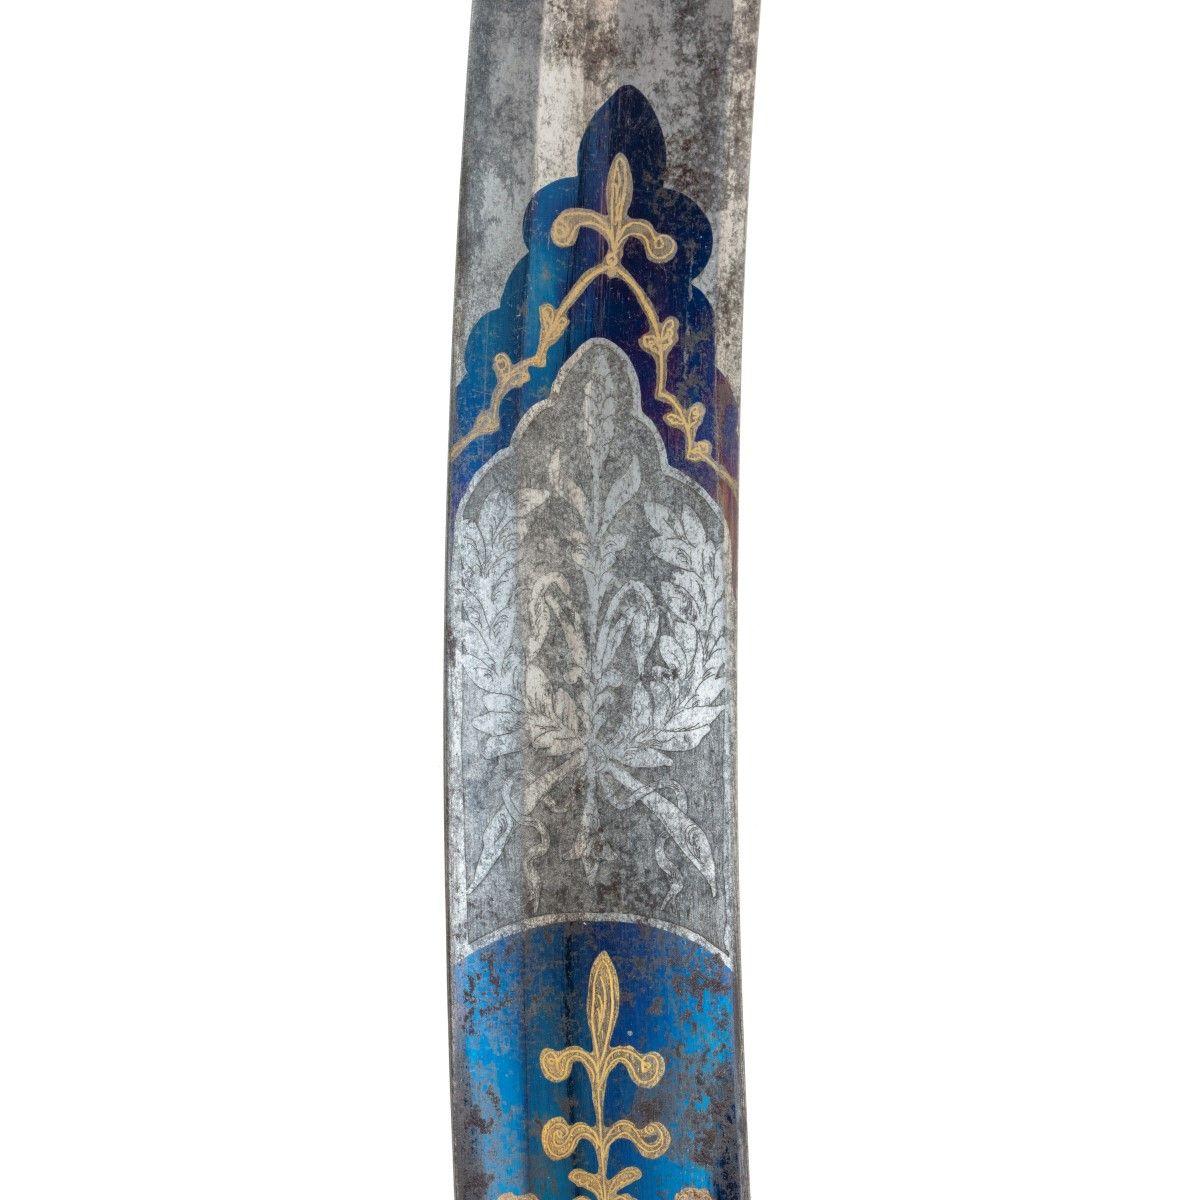 Midshipman Proctor’s Sword for Valour at the Battle of Copenhagen For Sale 2